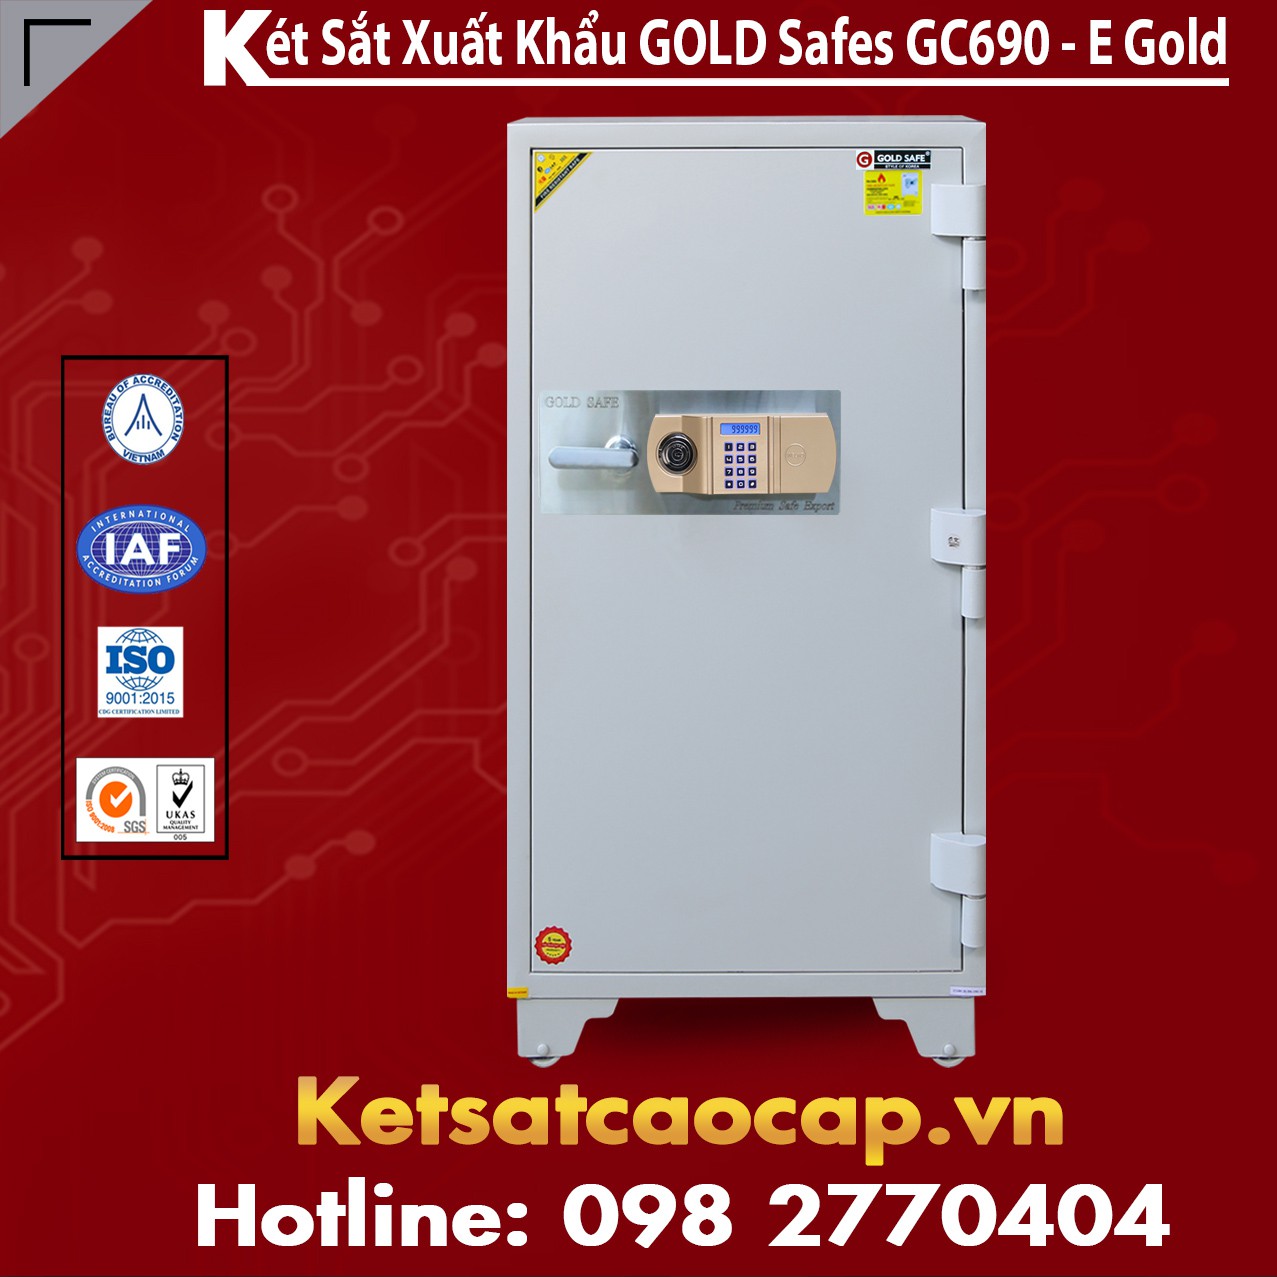 Két Sắt Thịnh Vượng GOLD SAFES GC690 E Gold